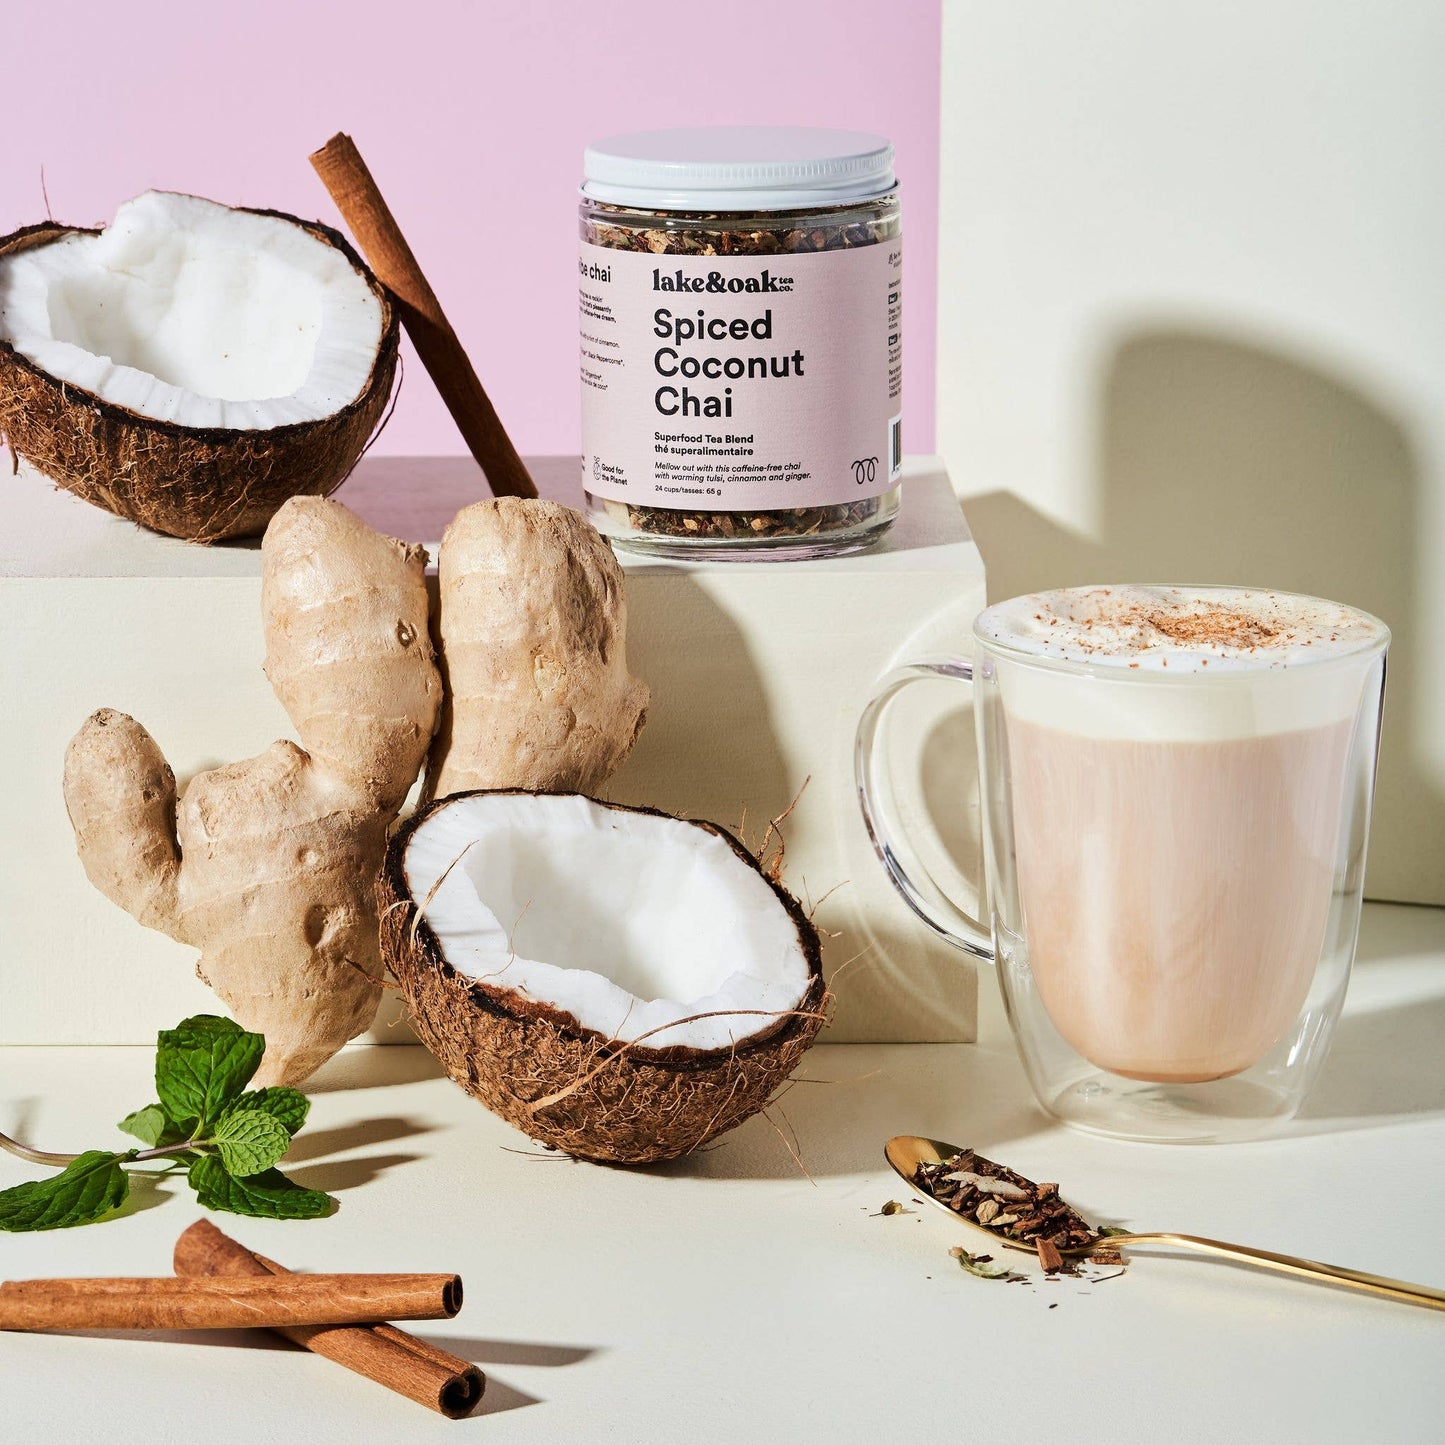 Spiced Coconut Chai - Superfood Tea Blend: Retail Jar